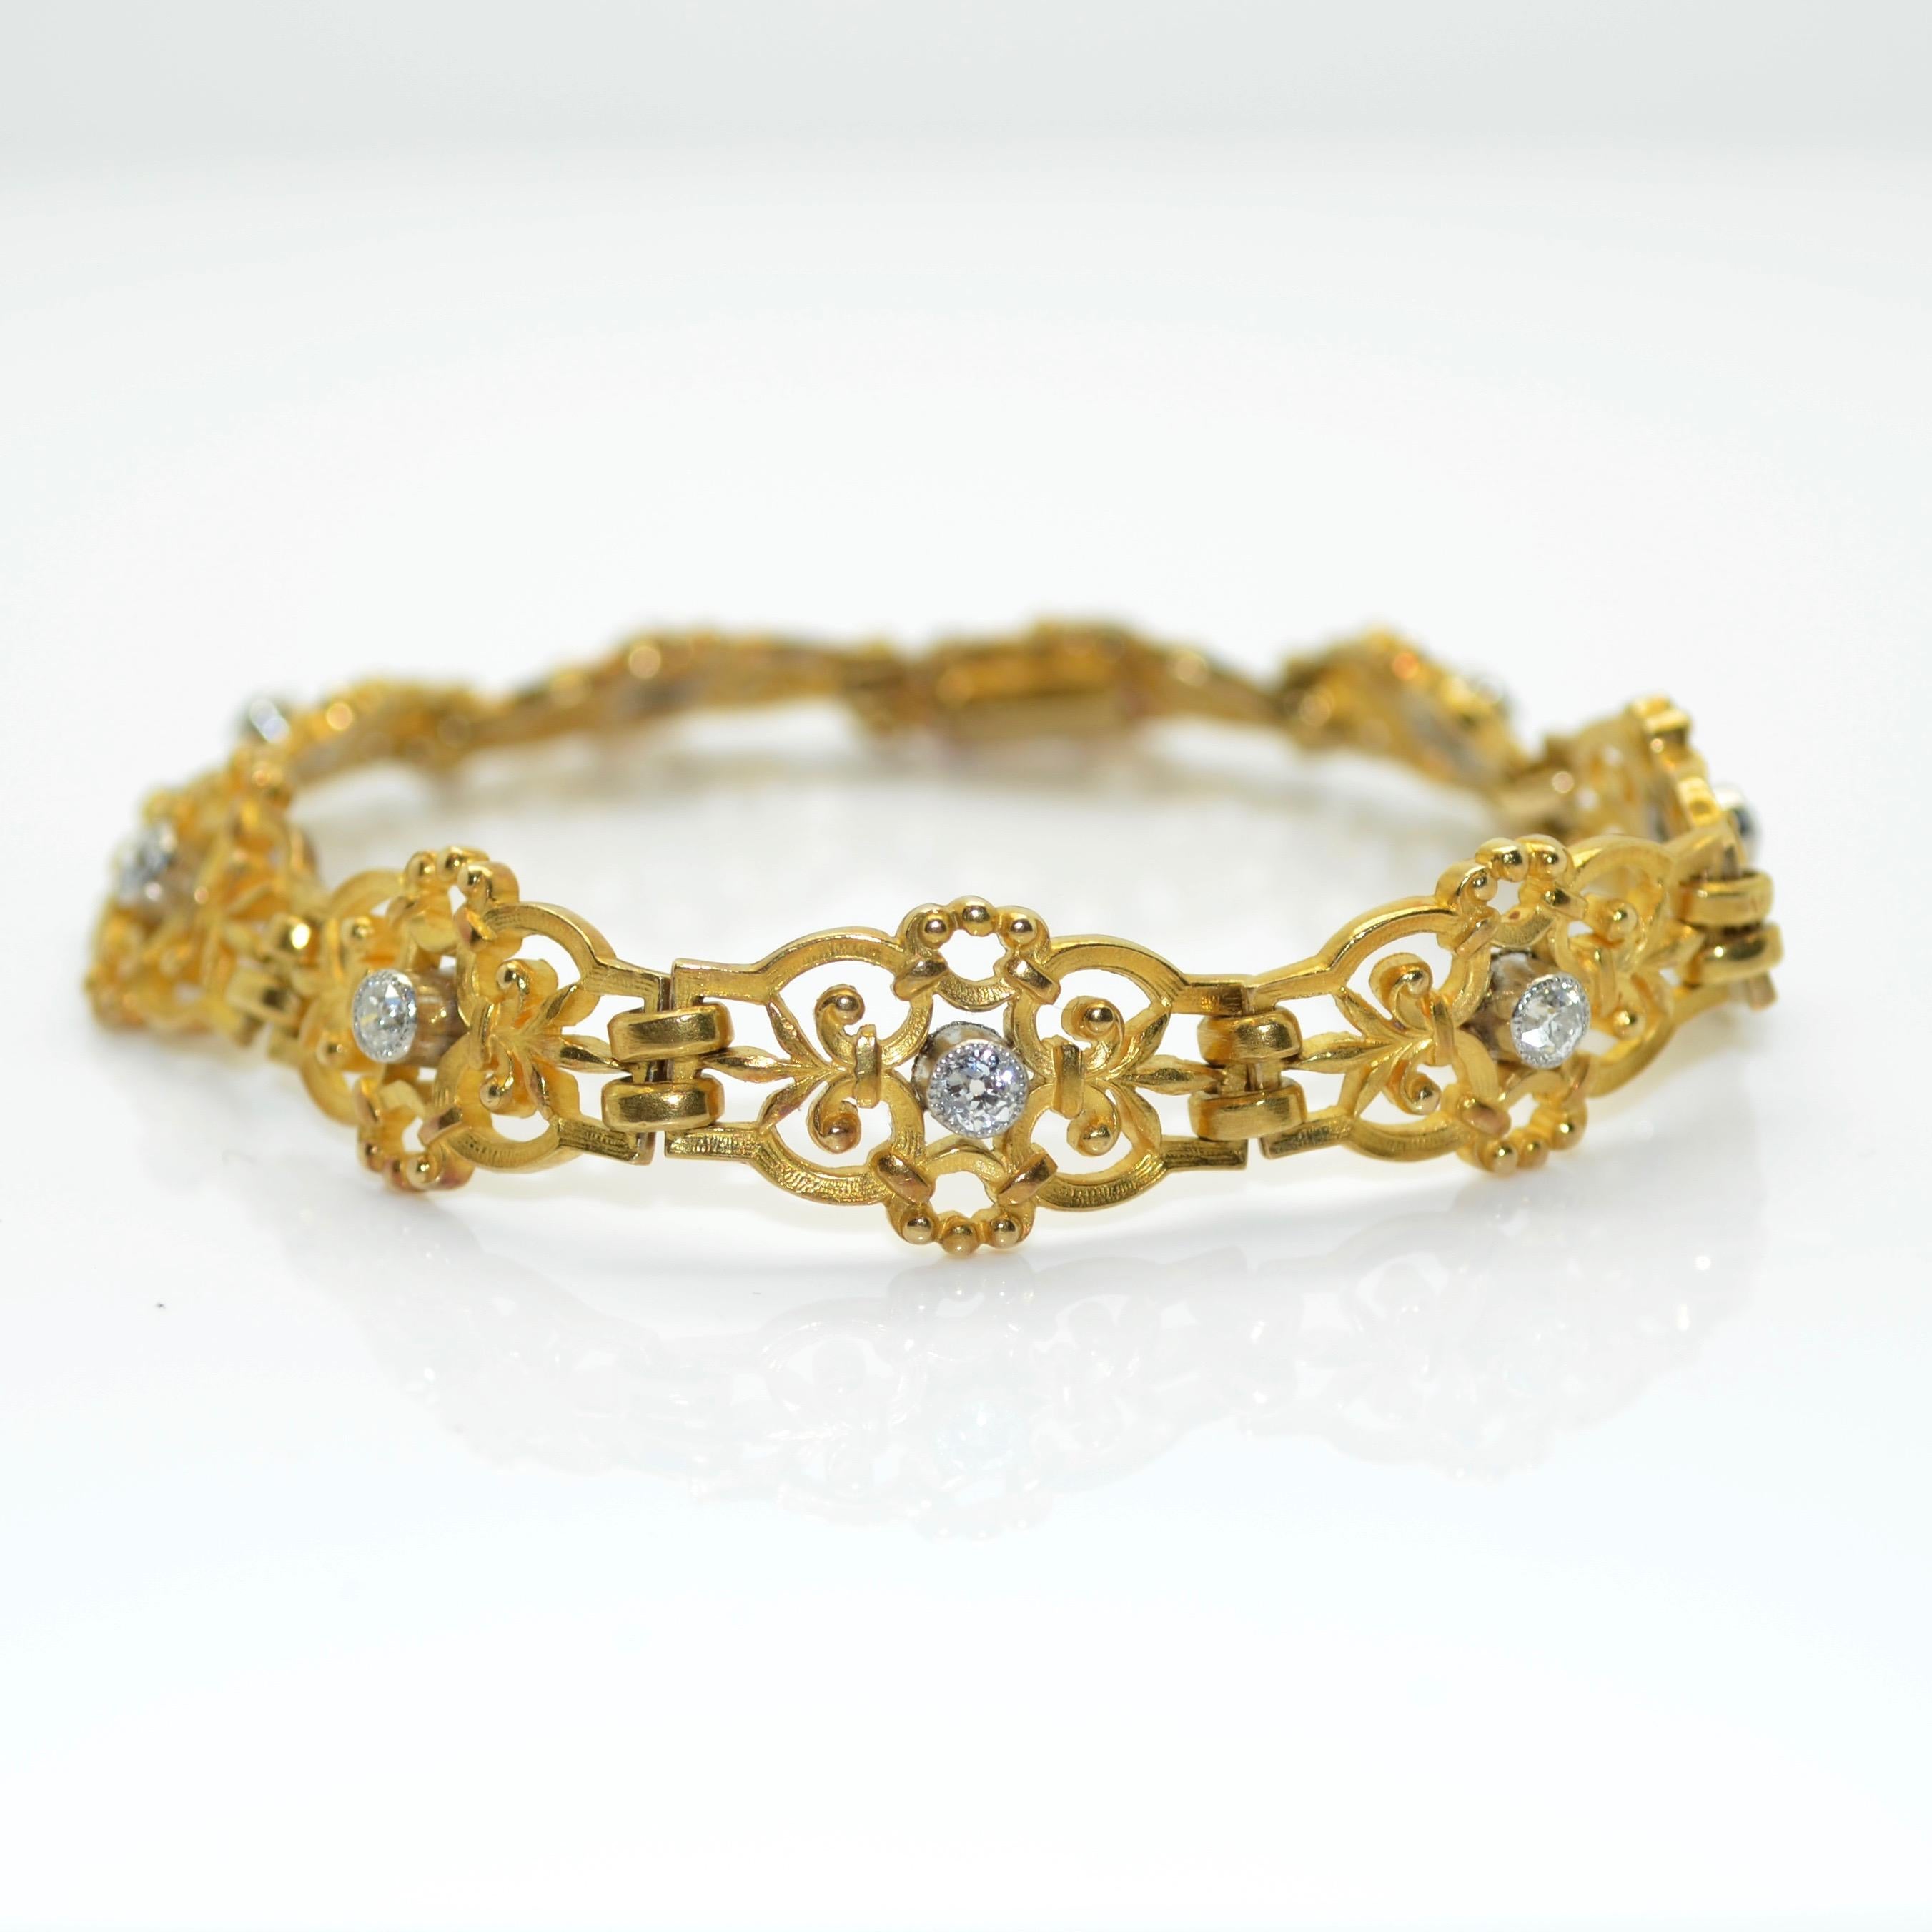 Napoleon III Antique 18 Karat Yellow Gold and Diamonds French Bracelet